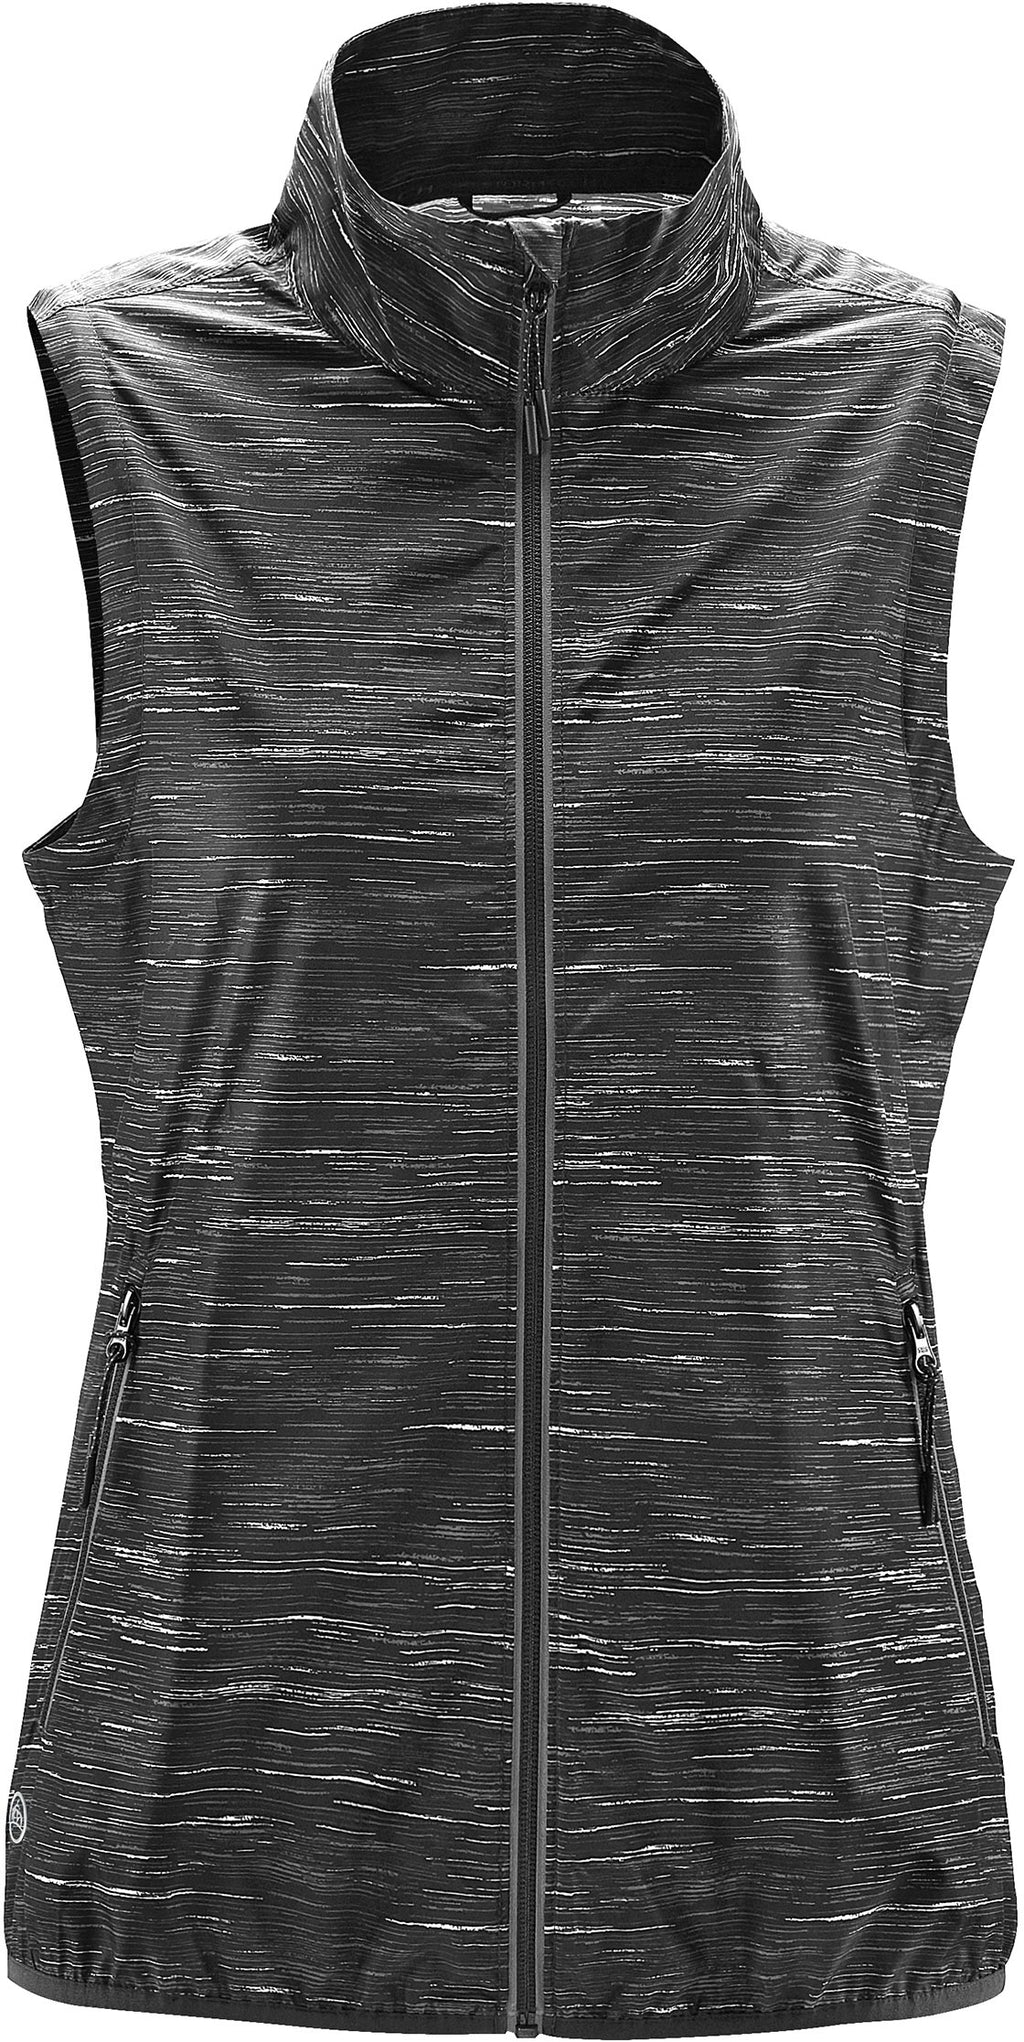 JCAPV-1W  Women's Ozone Lightweight Shell Vest